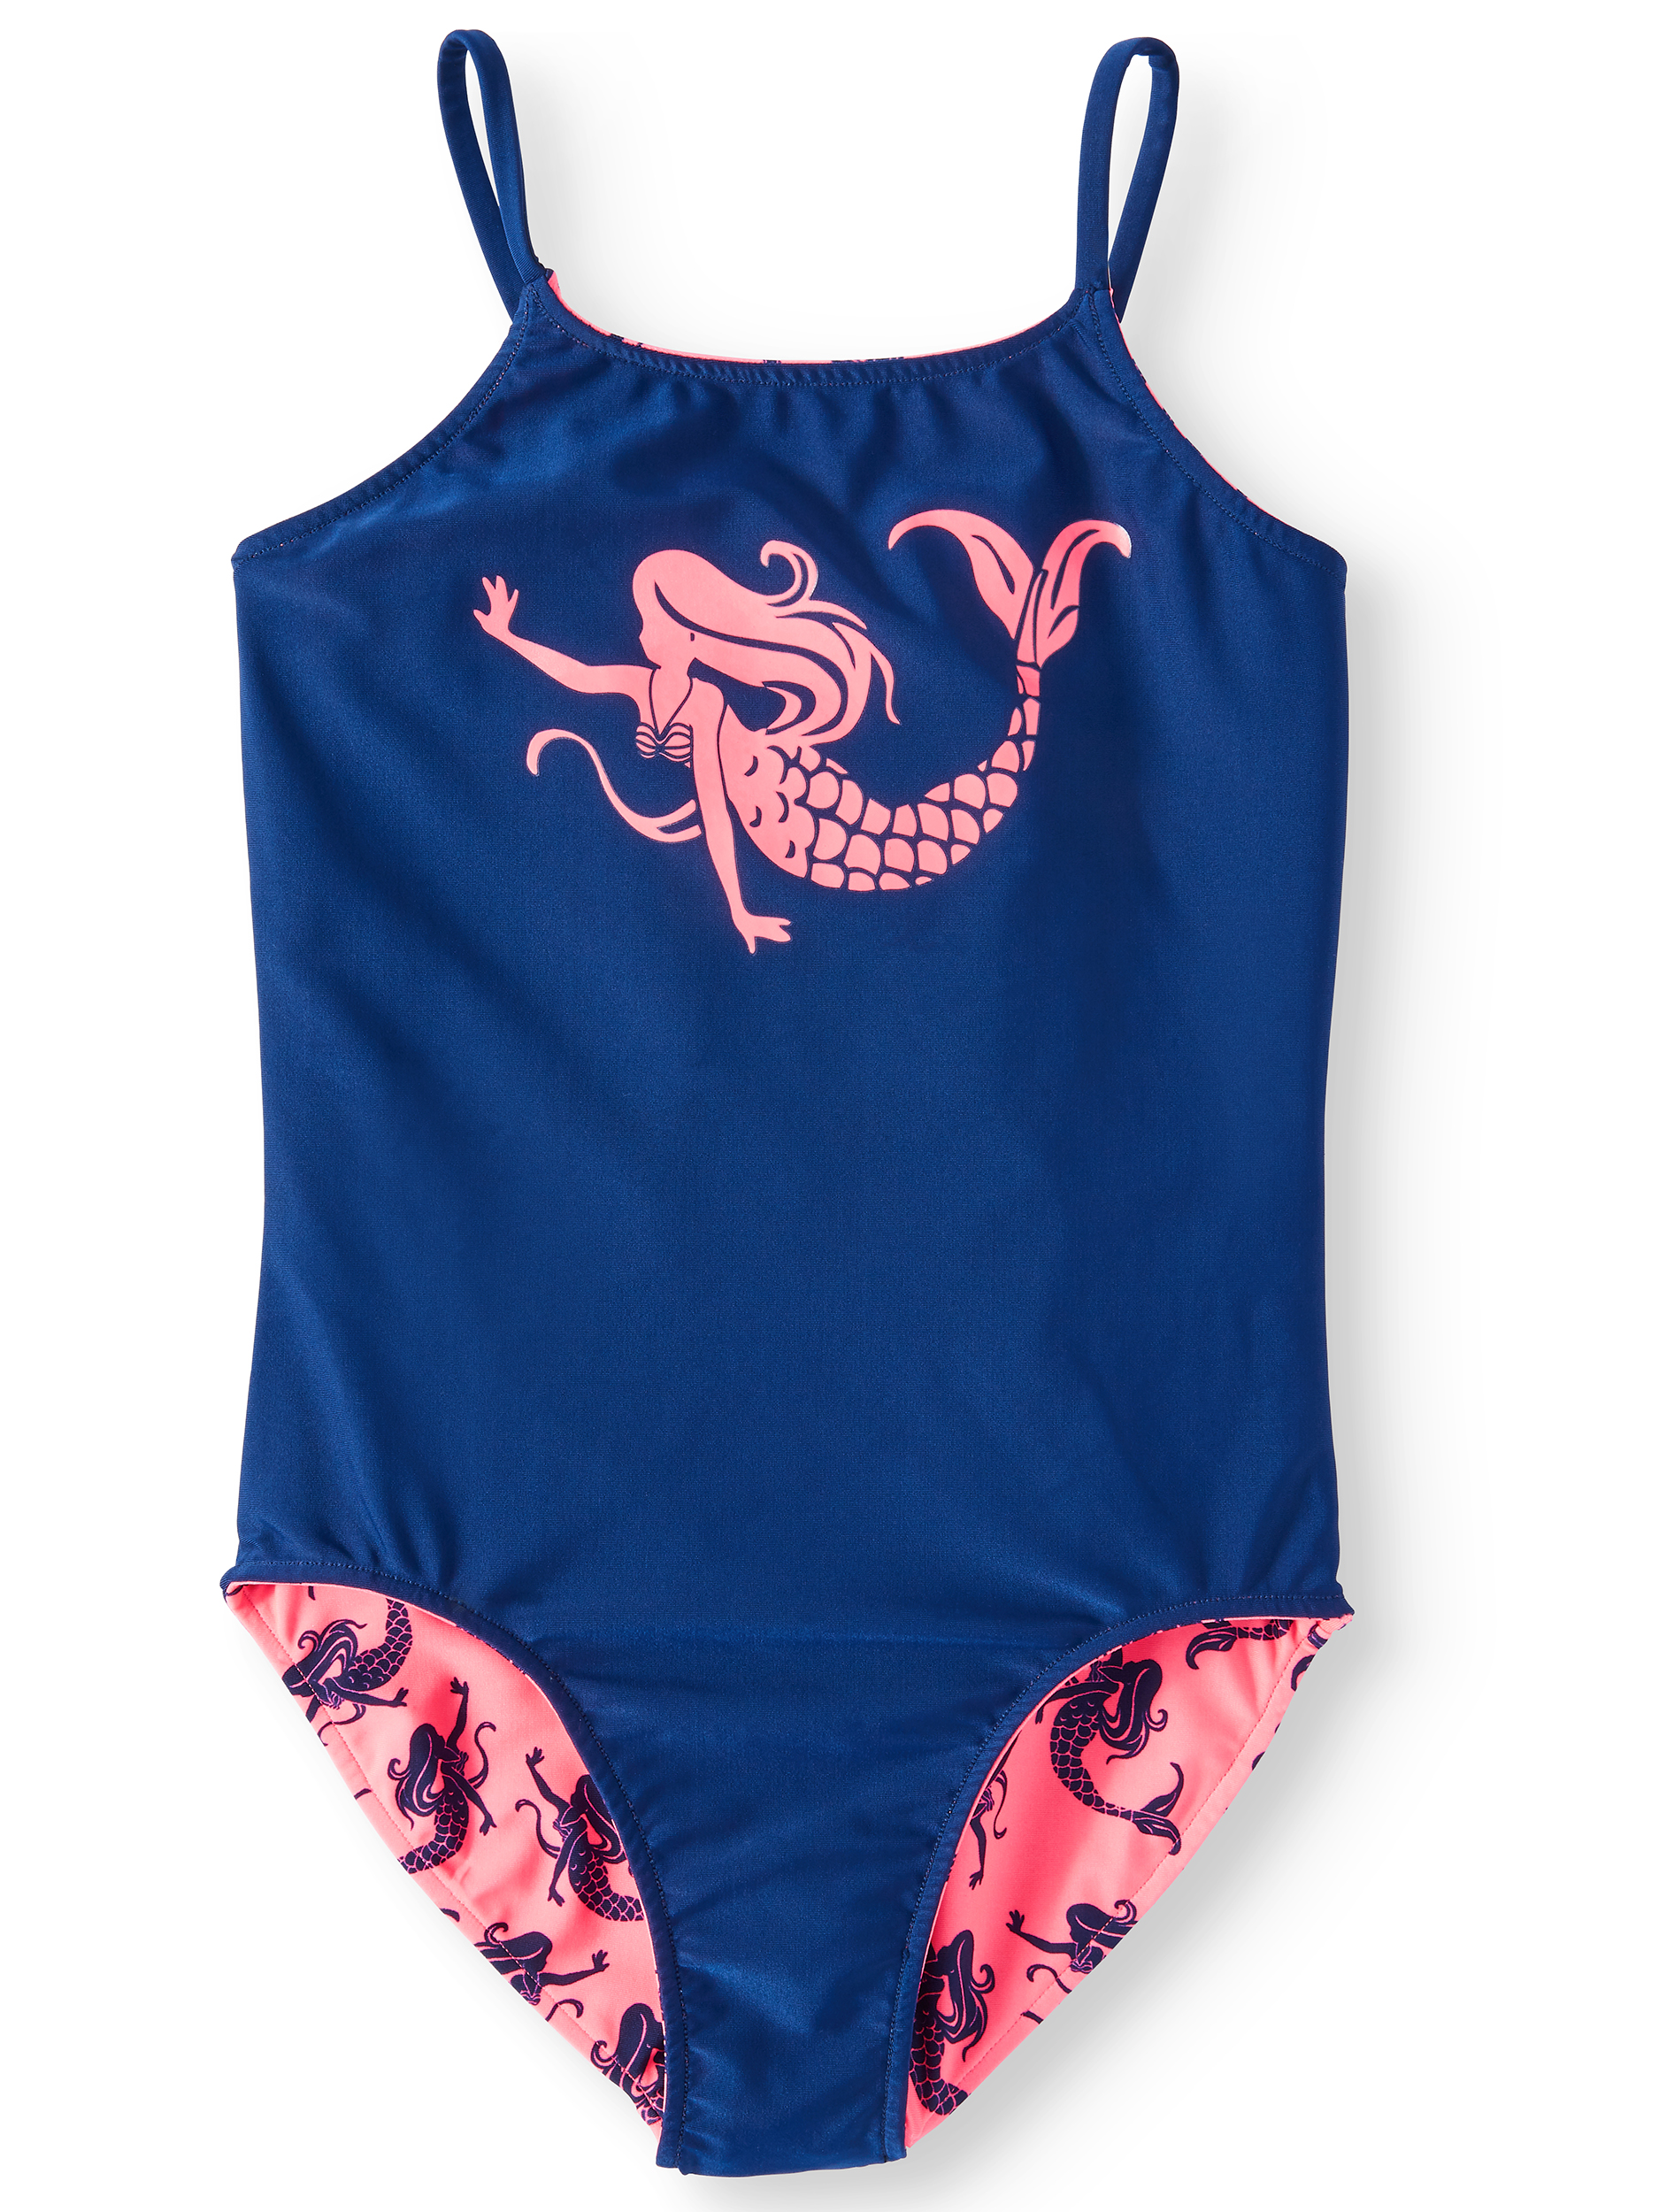 Reversible Printed One-Piece Swimsuit (Little Girls, Big Girls & Big Girls Plus) - image 3 of 3